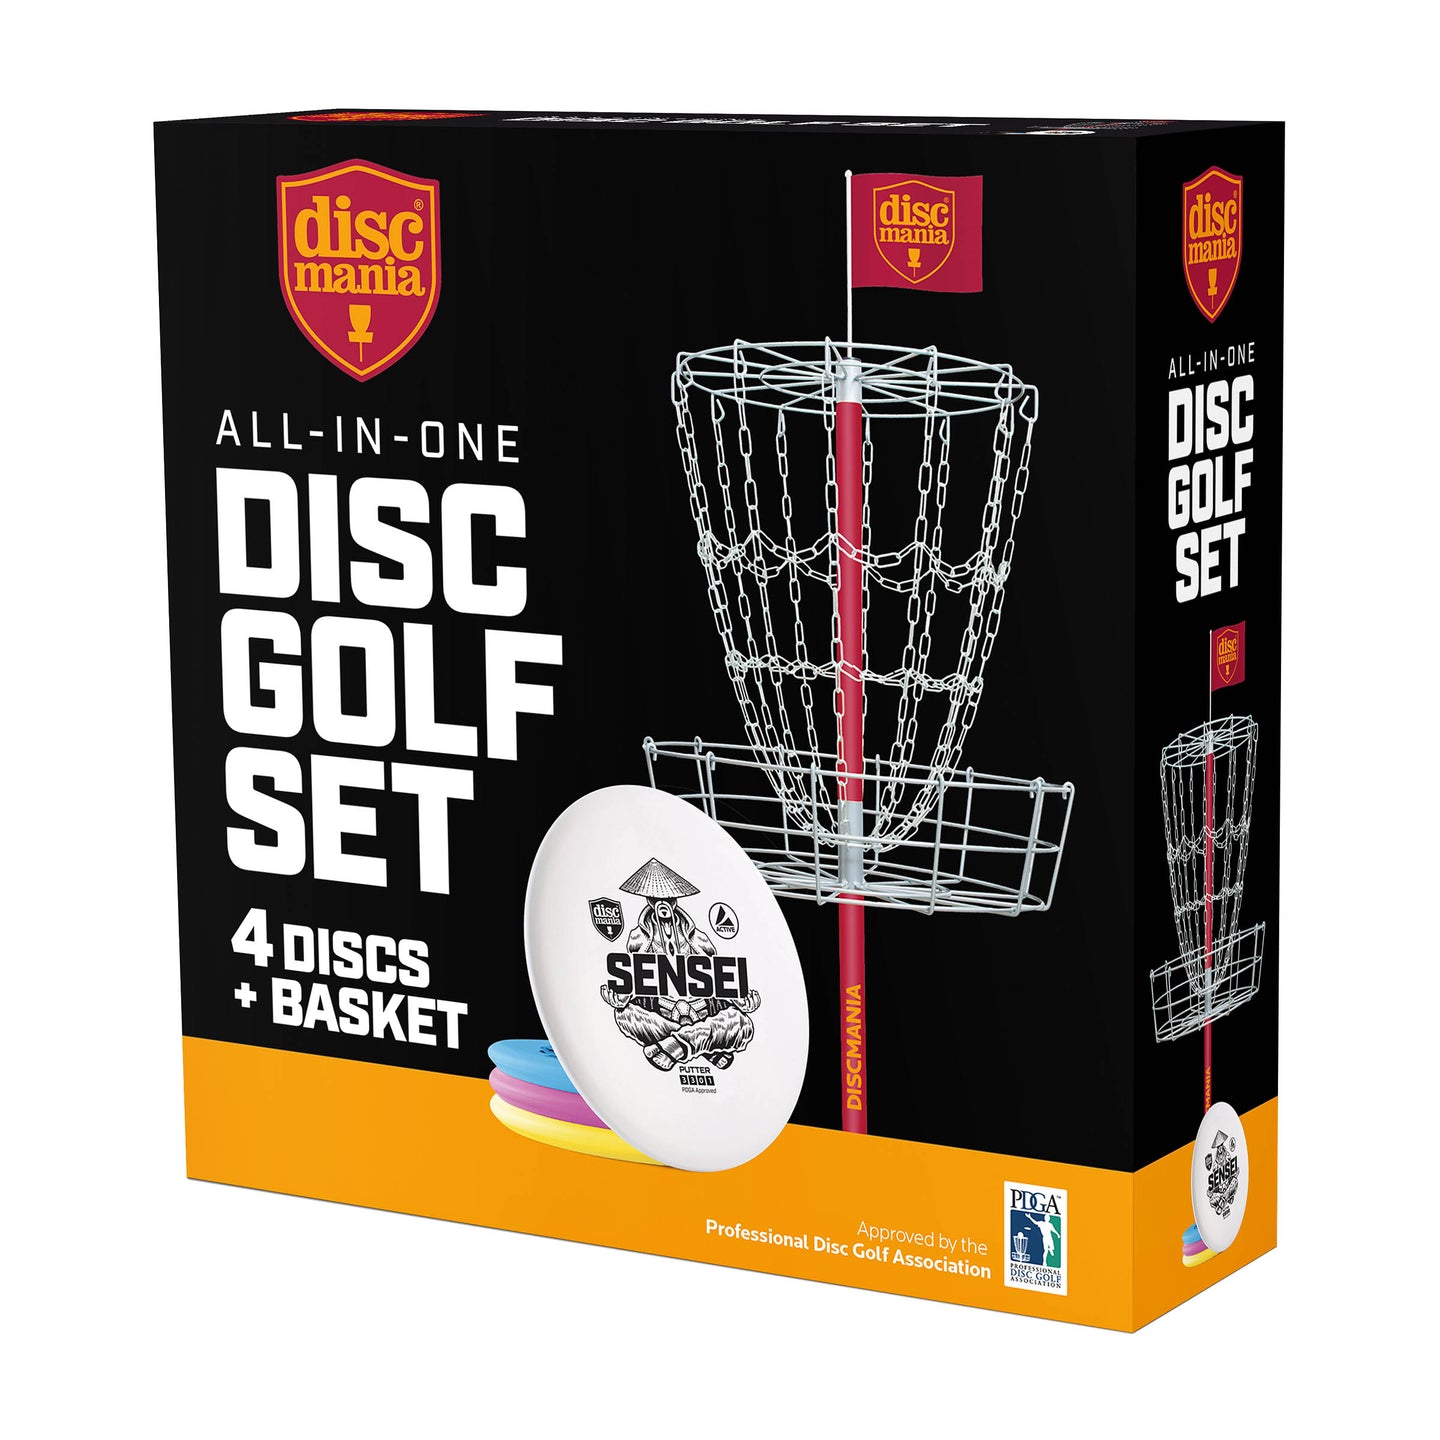 Discmania All-In-One Disc Golf Set